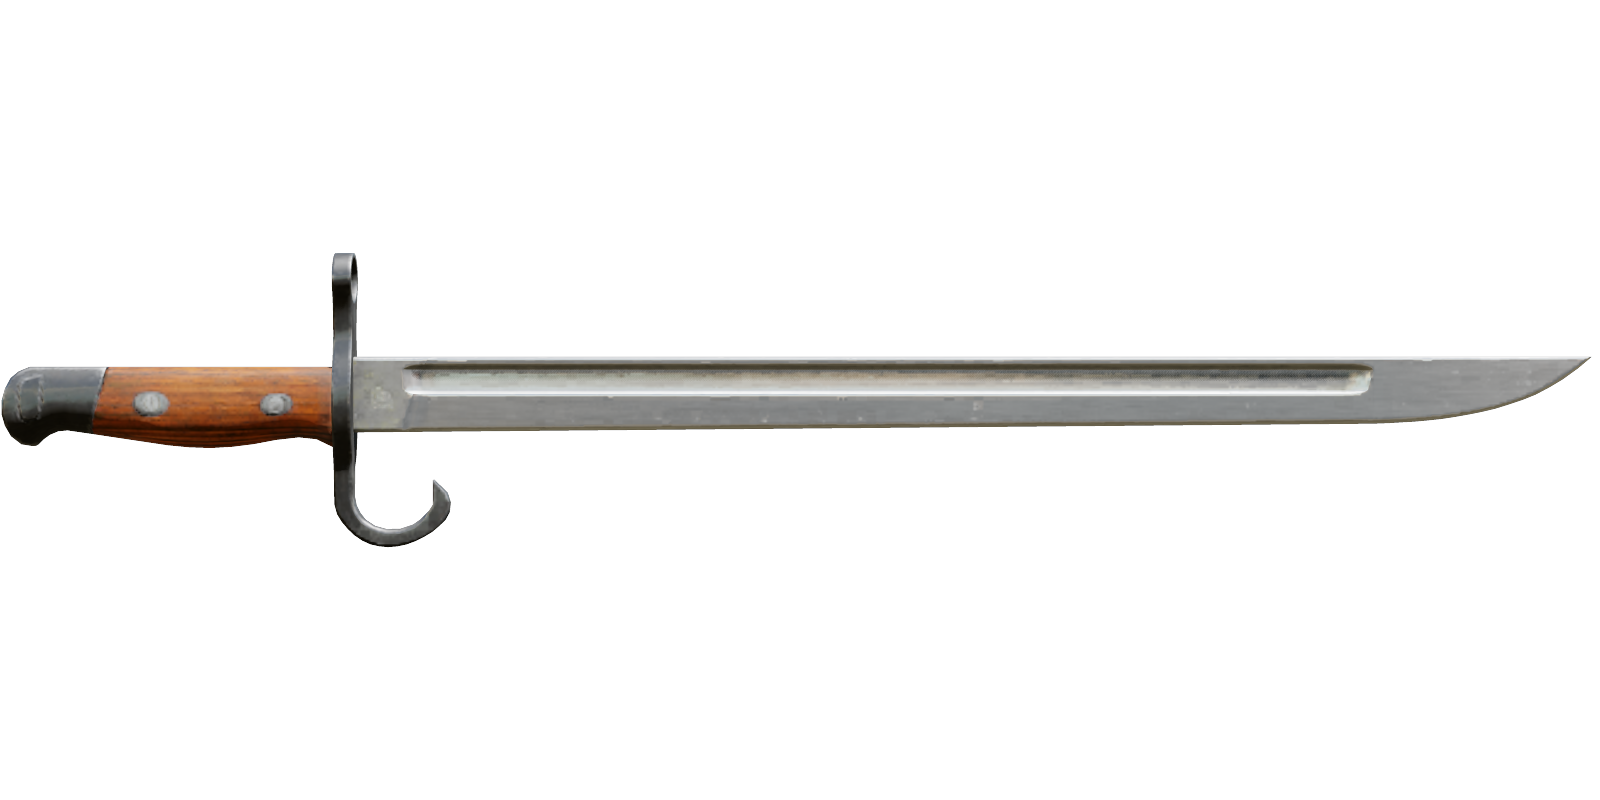 Type 30 bayonet item.png